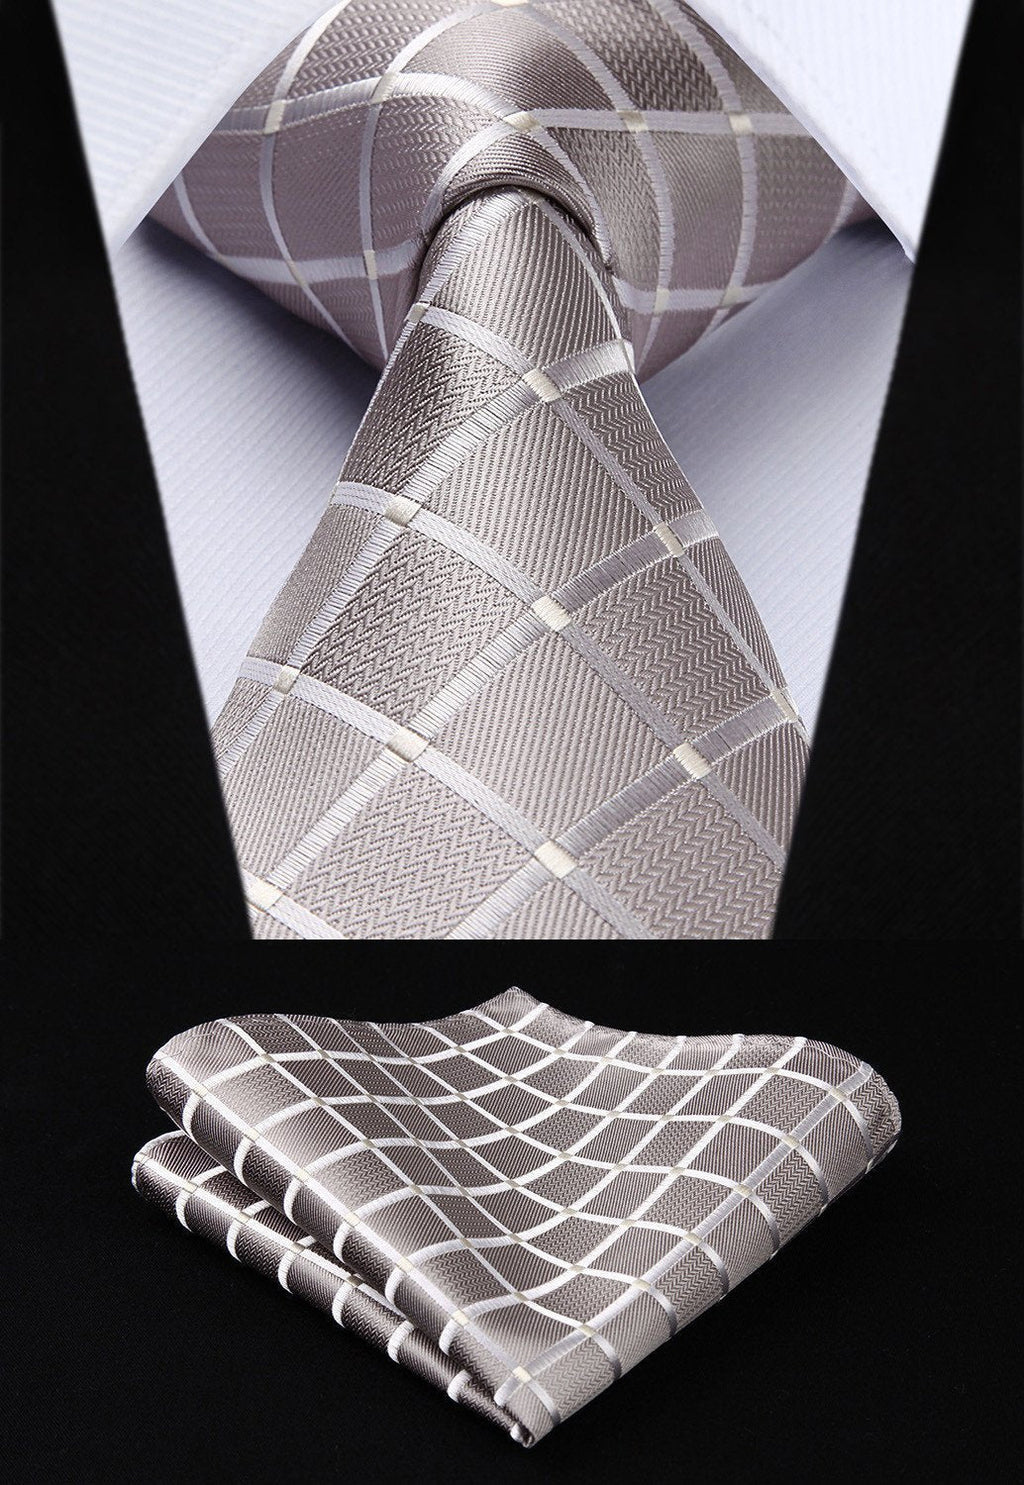 [Australia] - HISDERN Plaid Checkered Tie Handkerchief Woven Classic Men's Necktie & Pocket Square Set S-beige 8.5cm / 3.4 inches in Width 